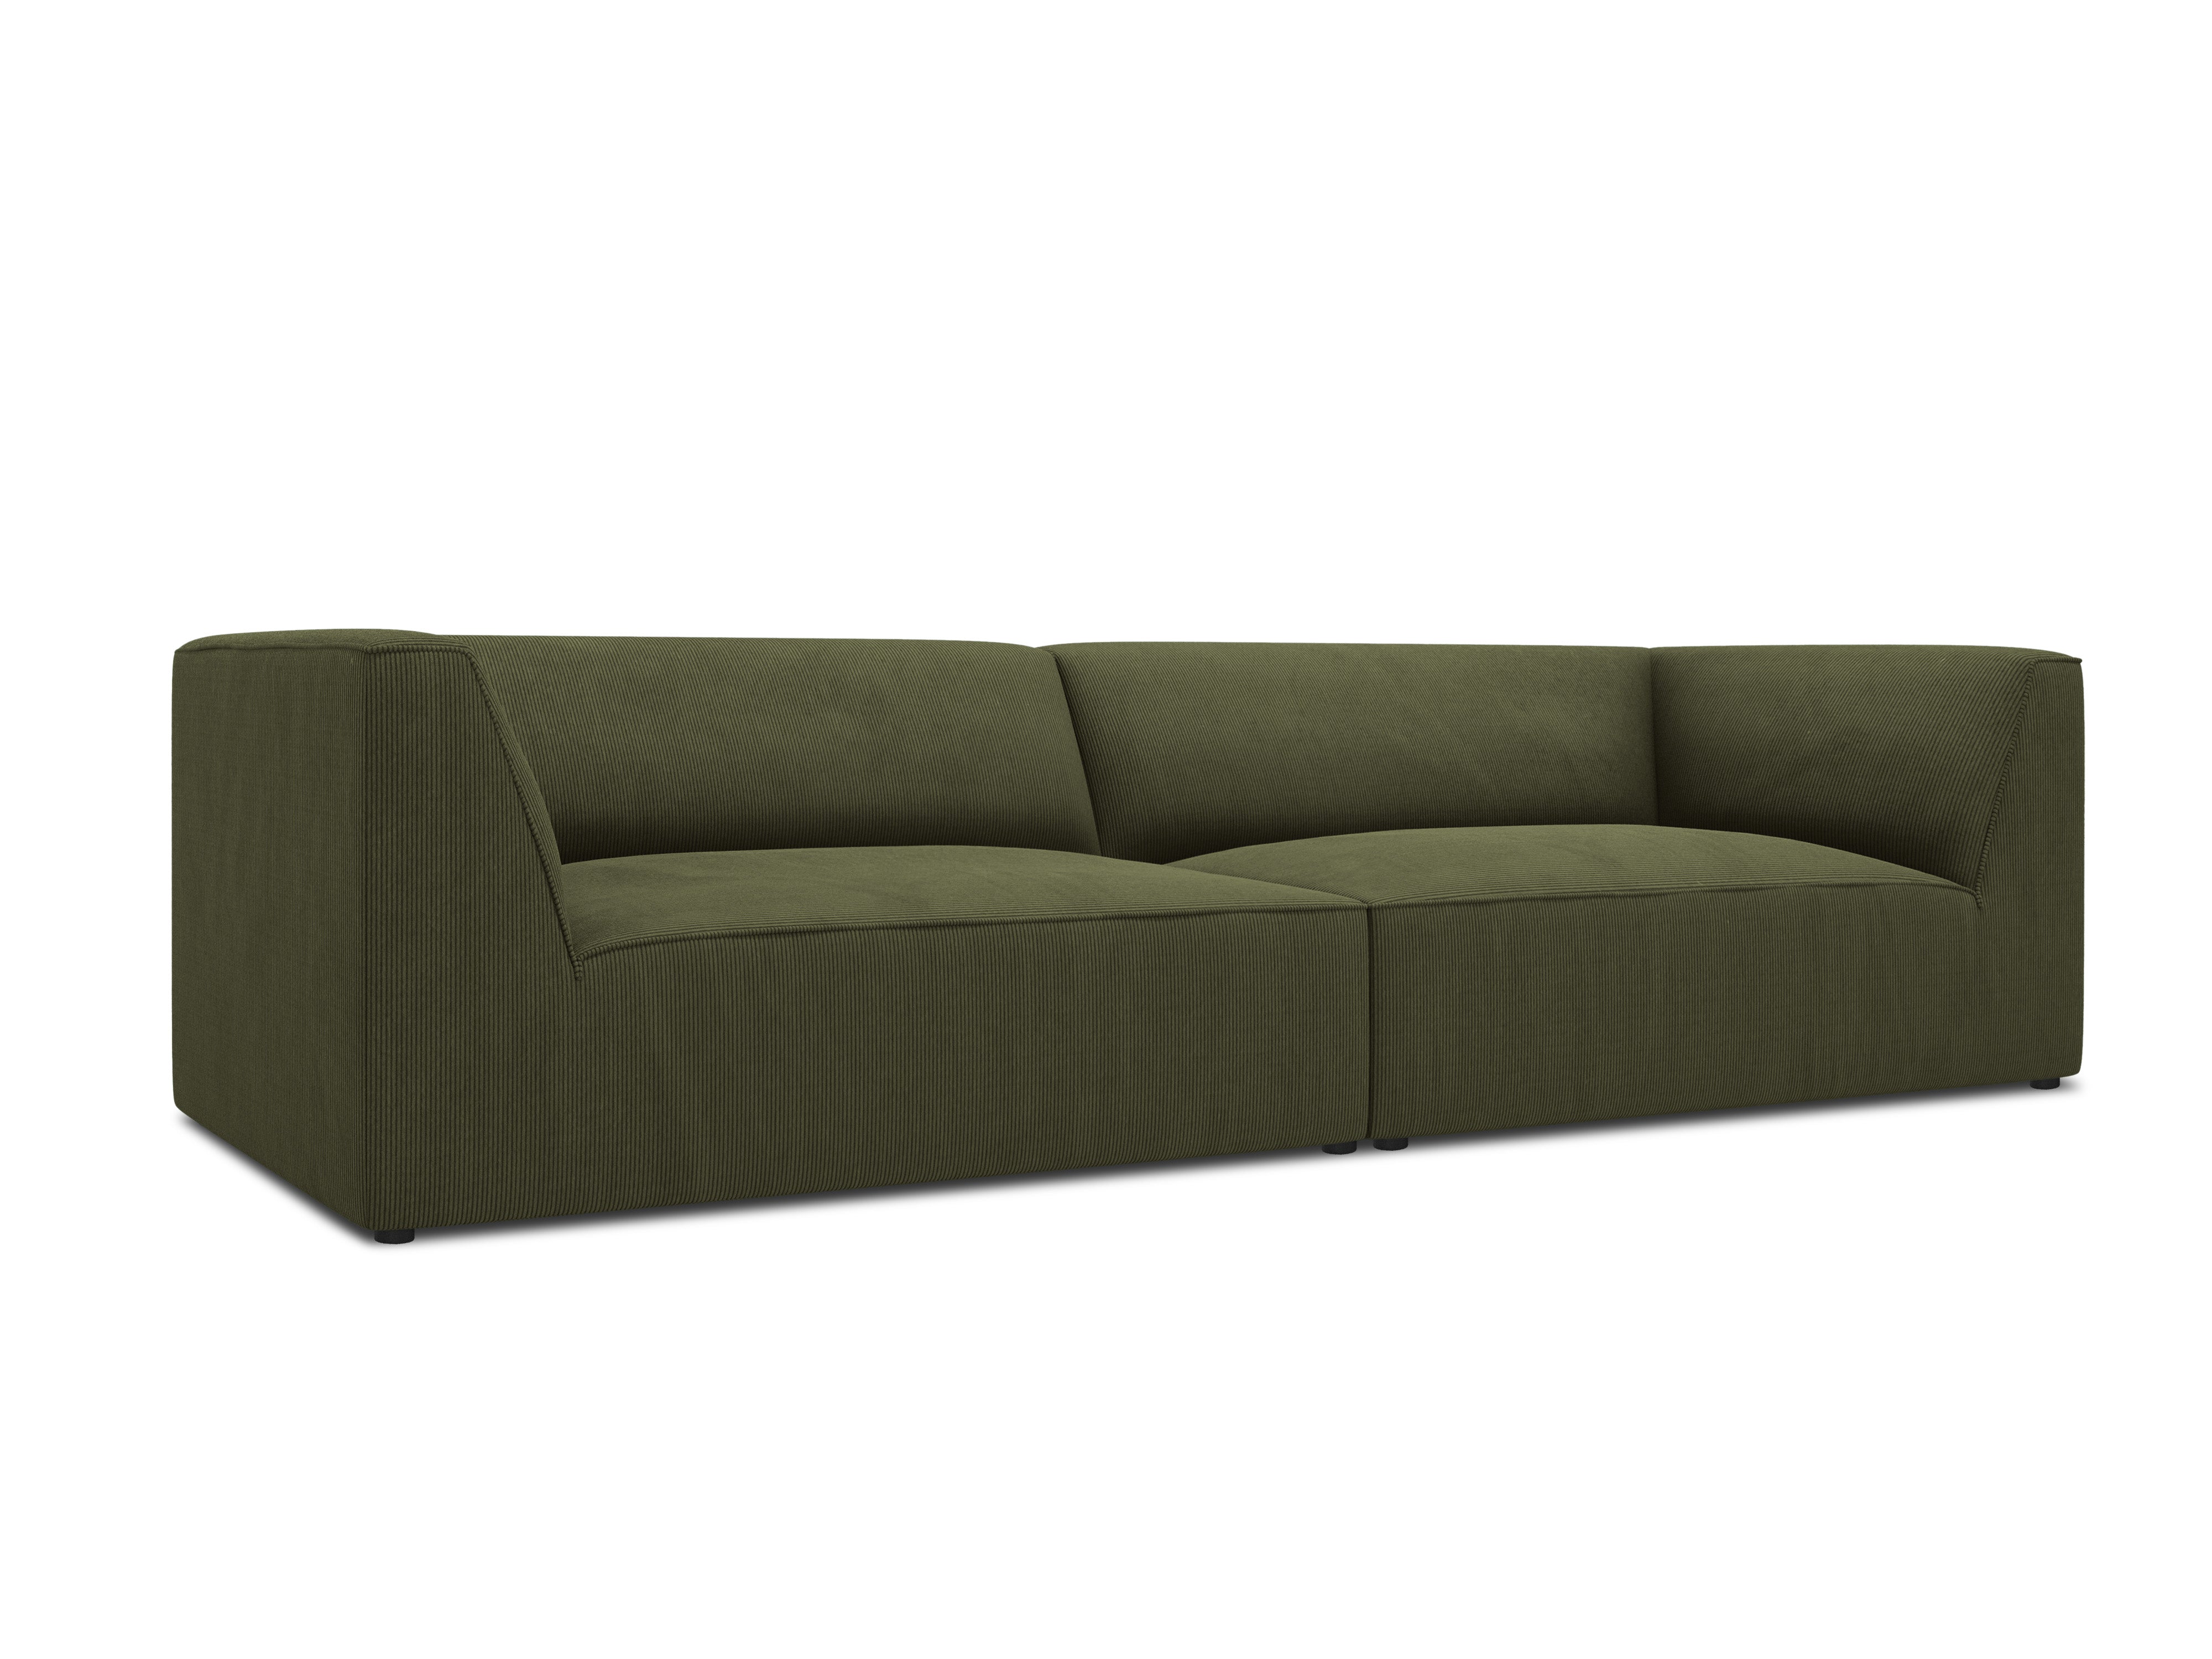 Green corduroy sofa